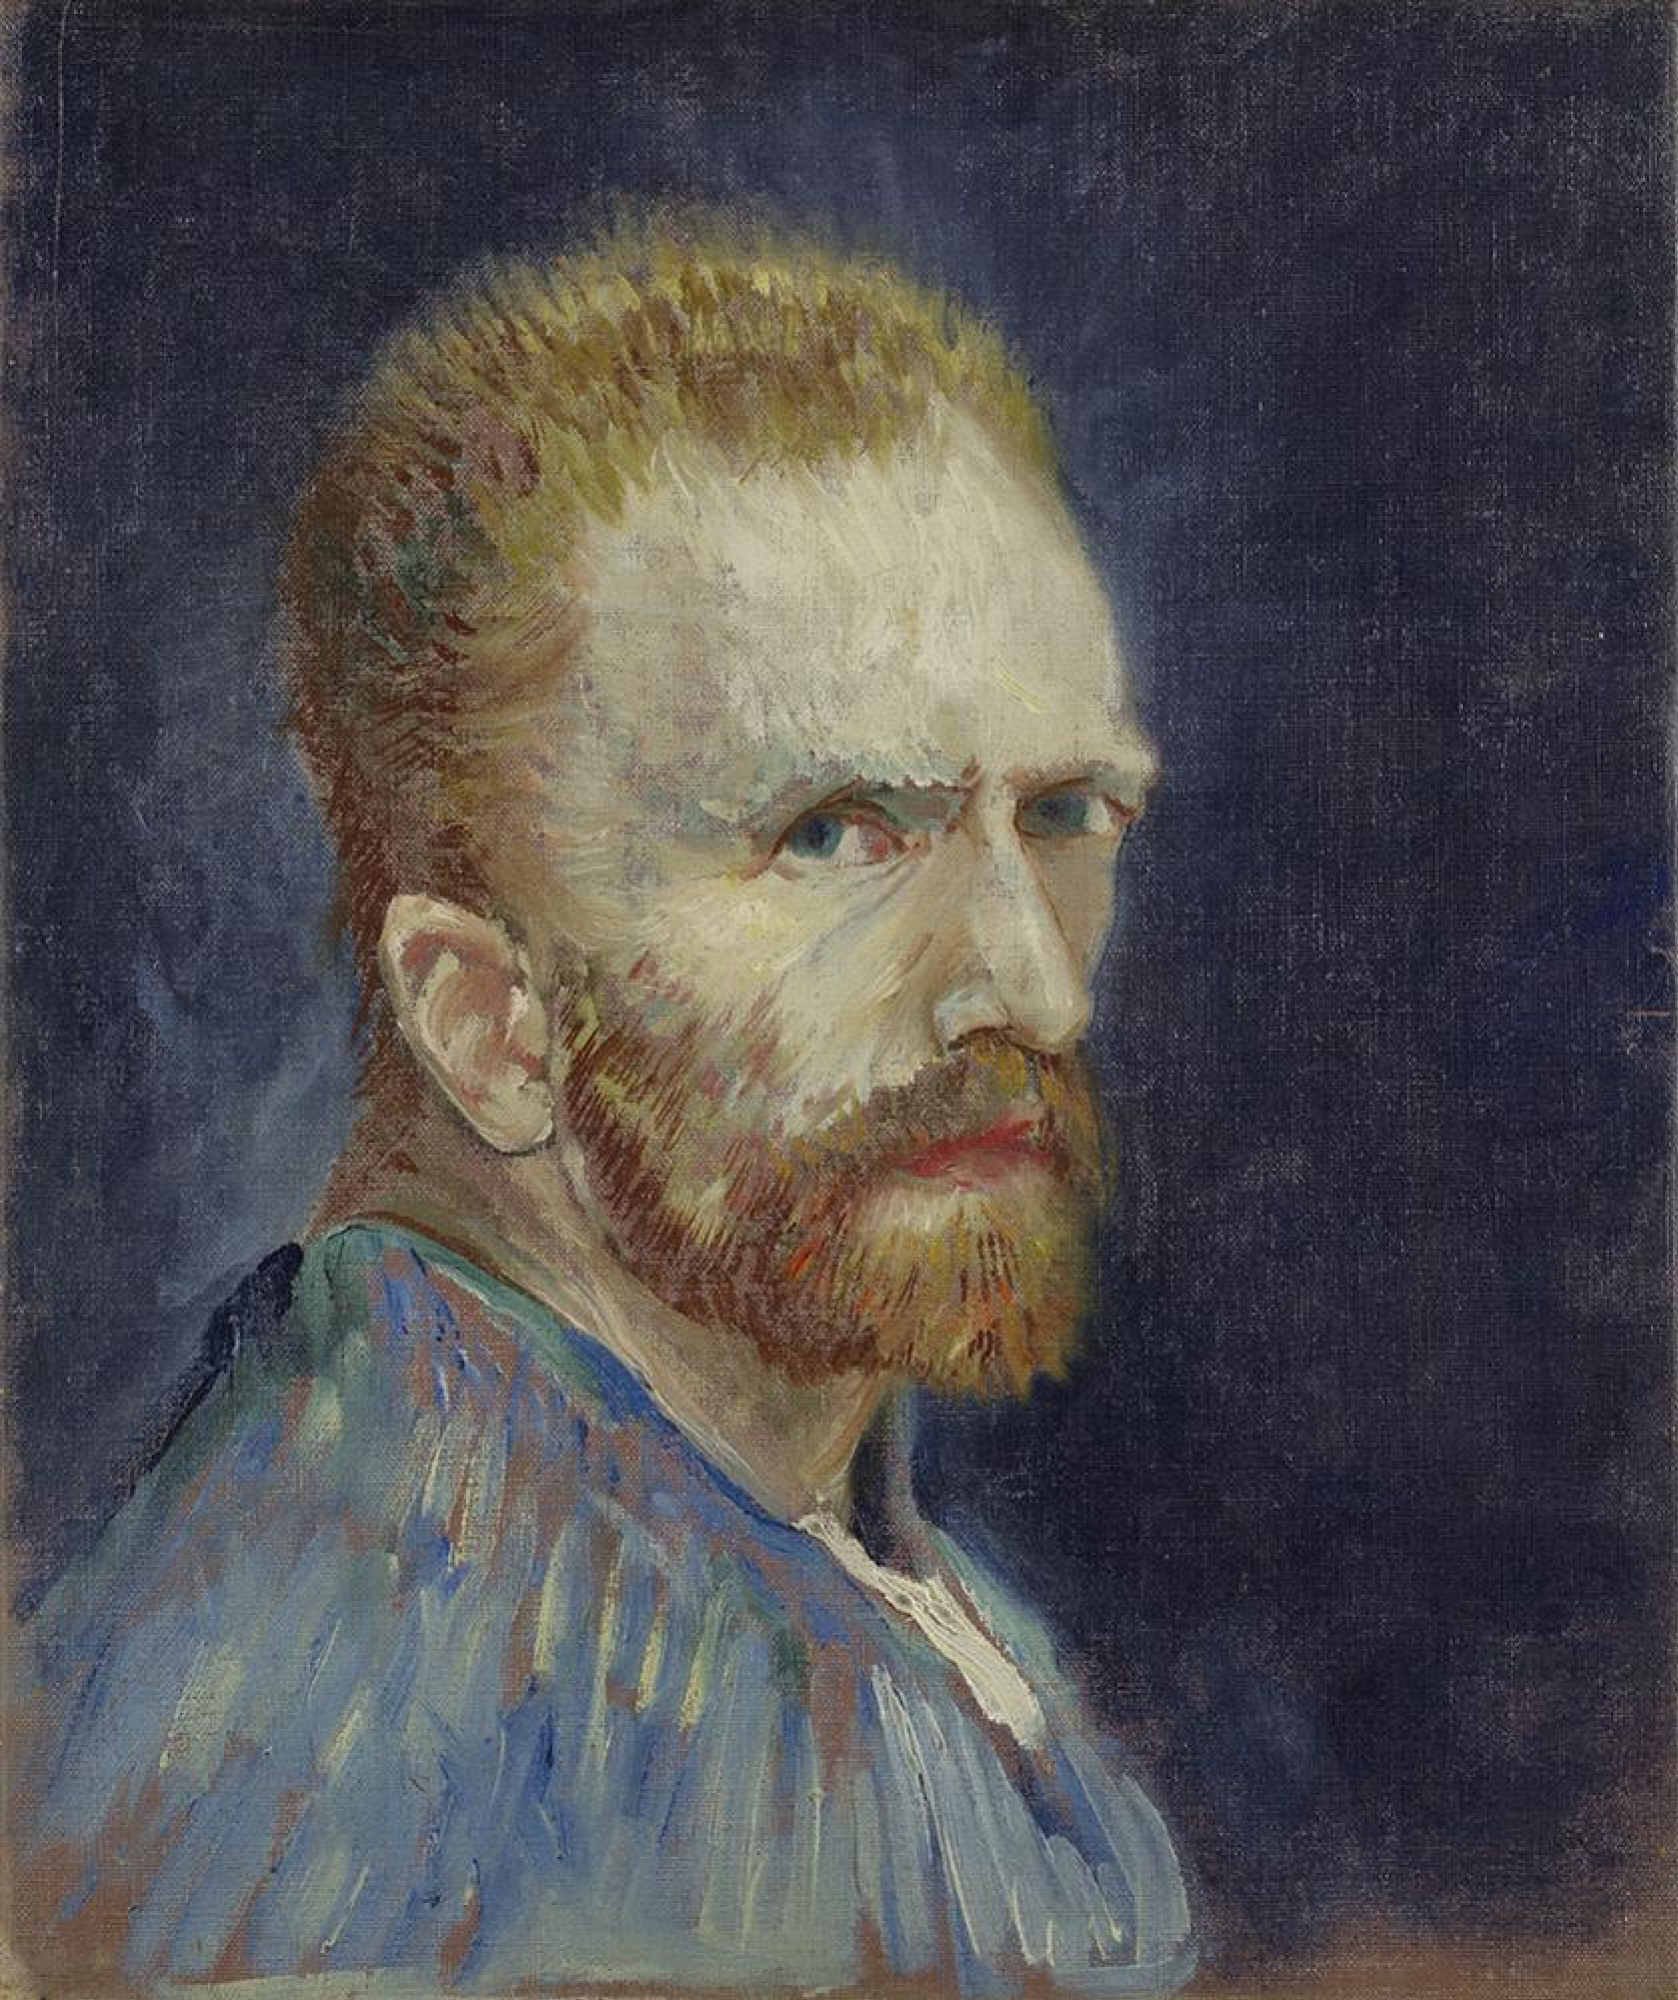 Van Gogh self-portrait (1889) - Wikipedia